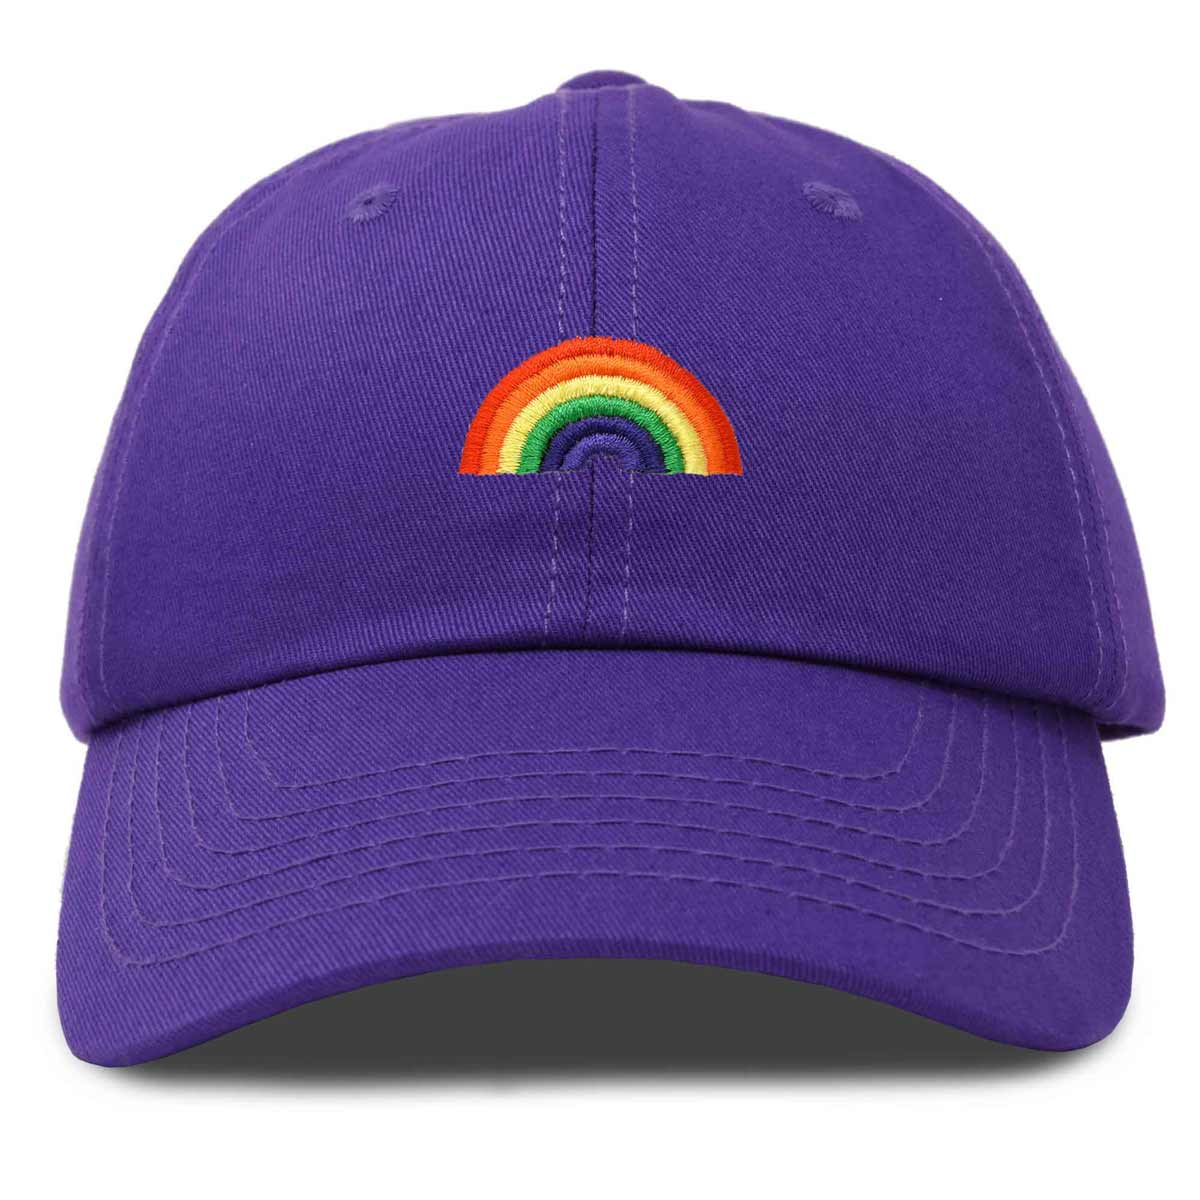 Rainbow Baseball Cap - Purple